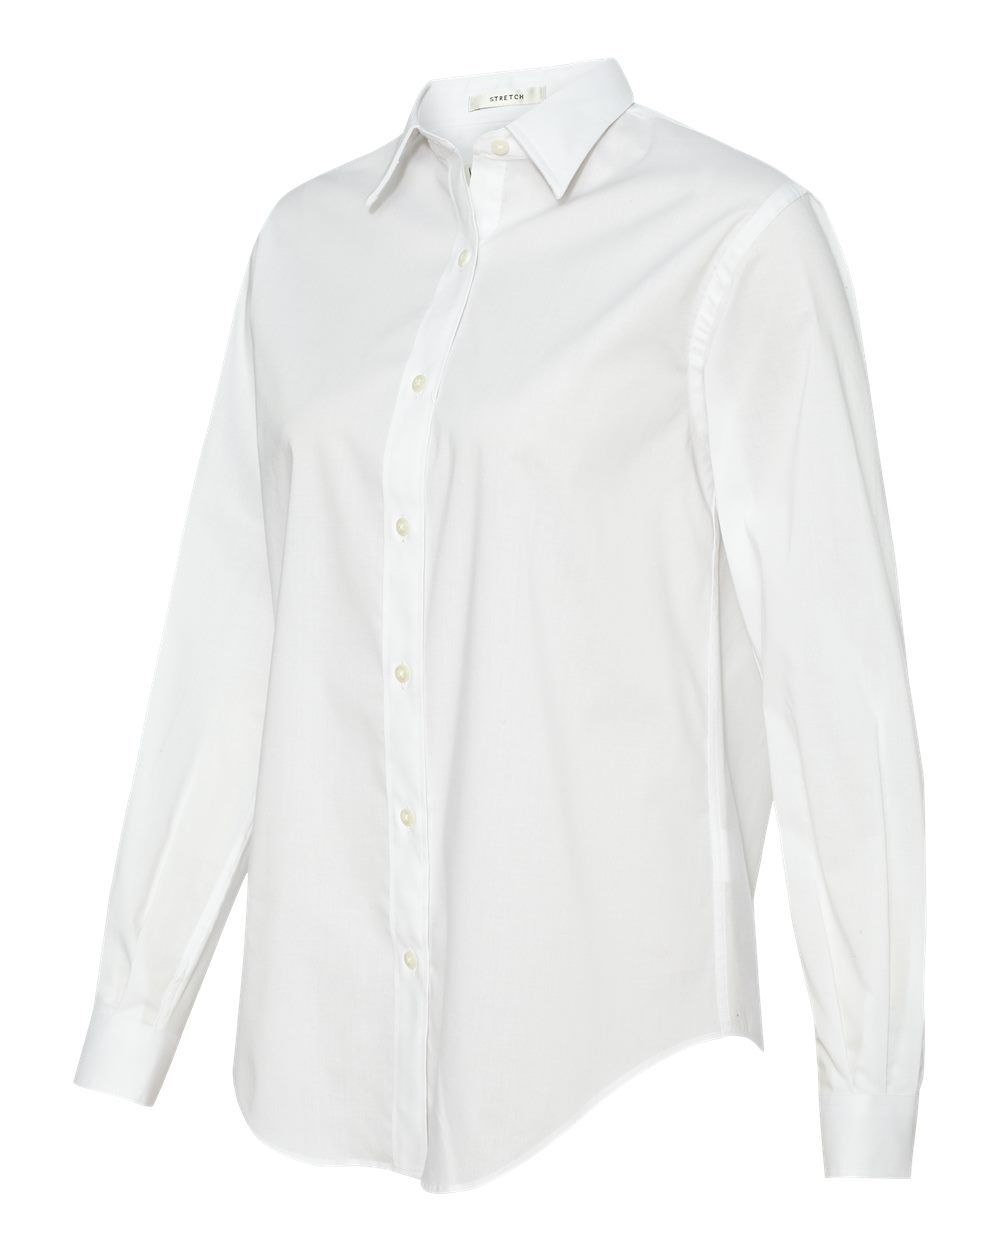 Van Heusen 13V0238 Ladies' Stretch Pinpoint Spread Collar Shirt $23.32